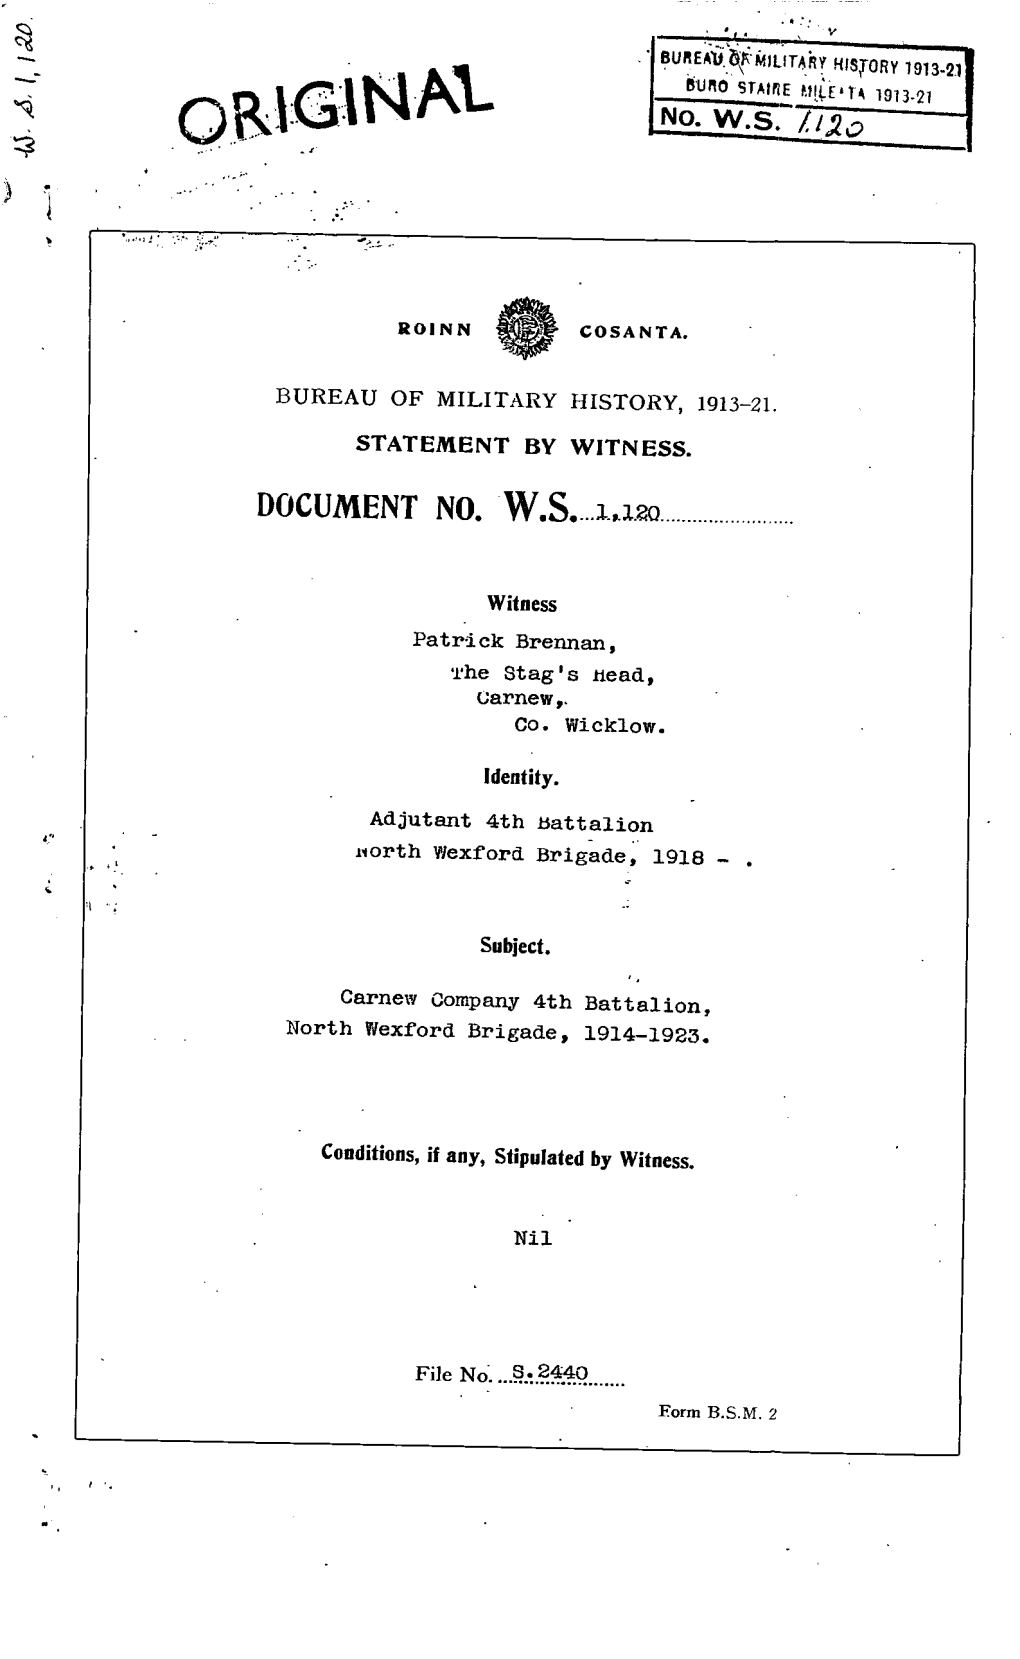 Bureauof Militaryhistory1913-21 Burostalremileat 1913-21